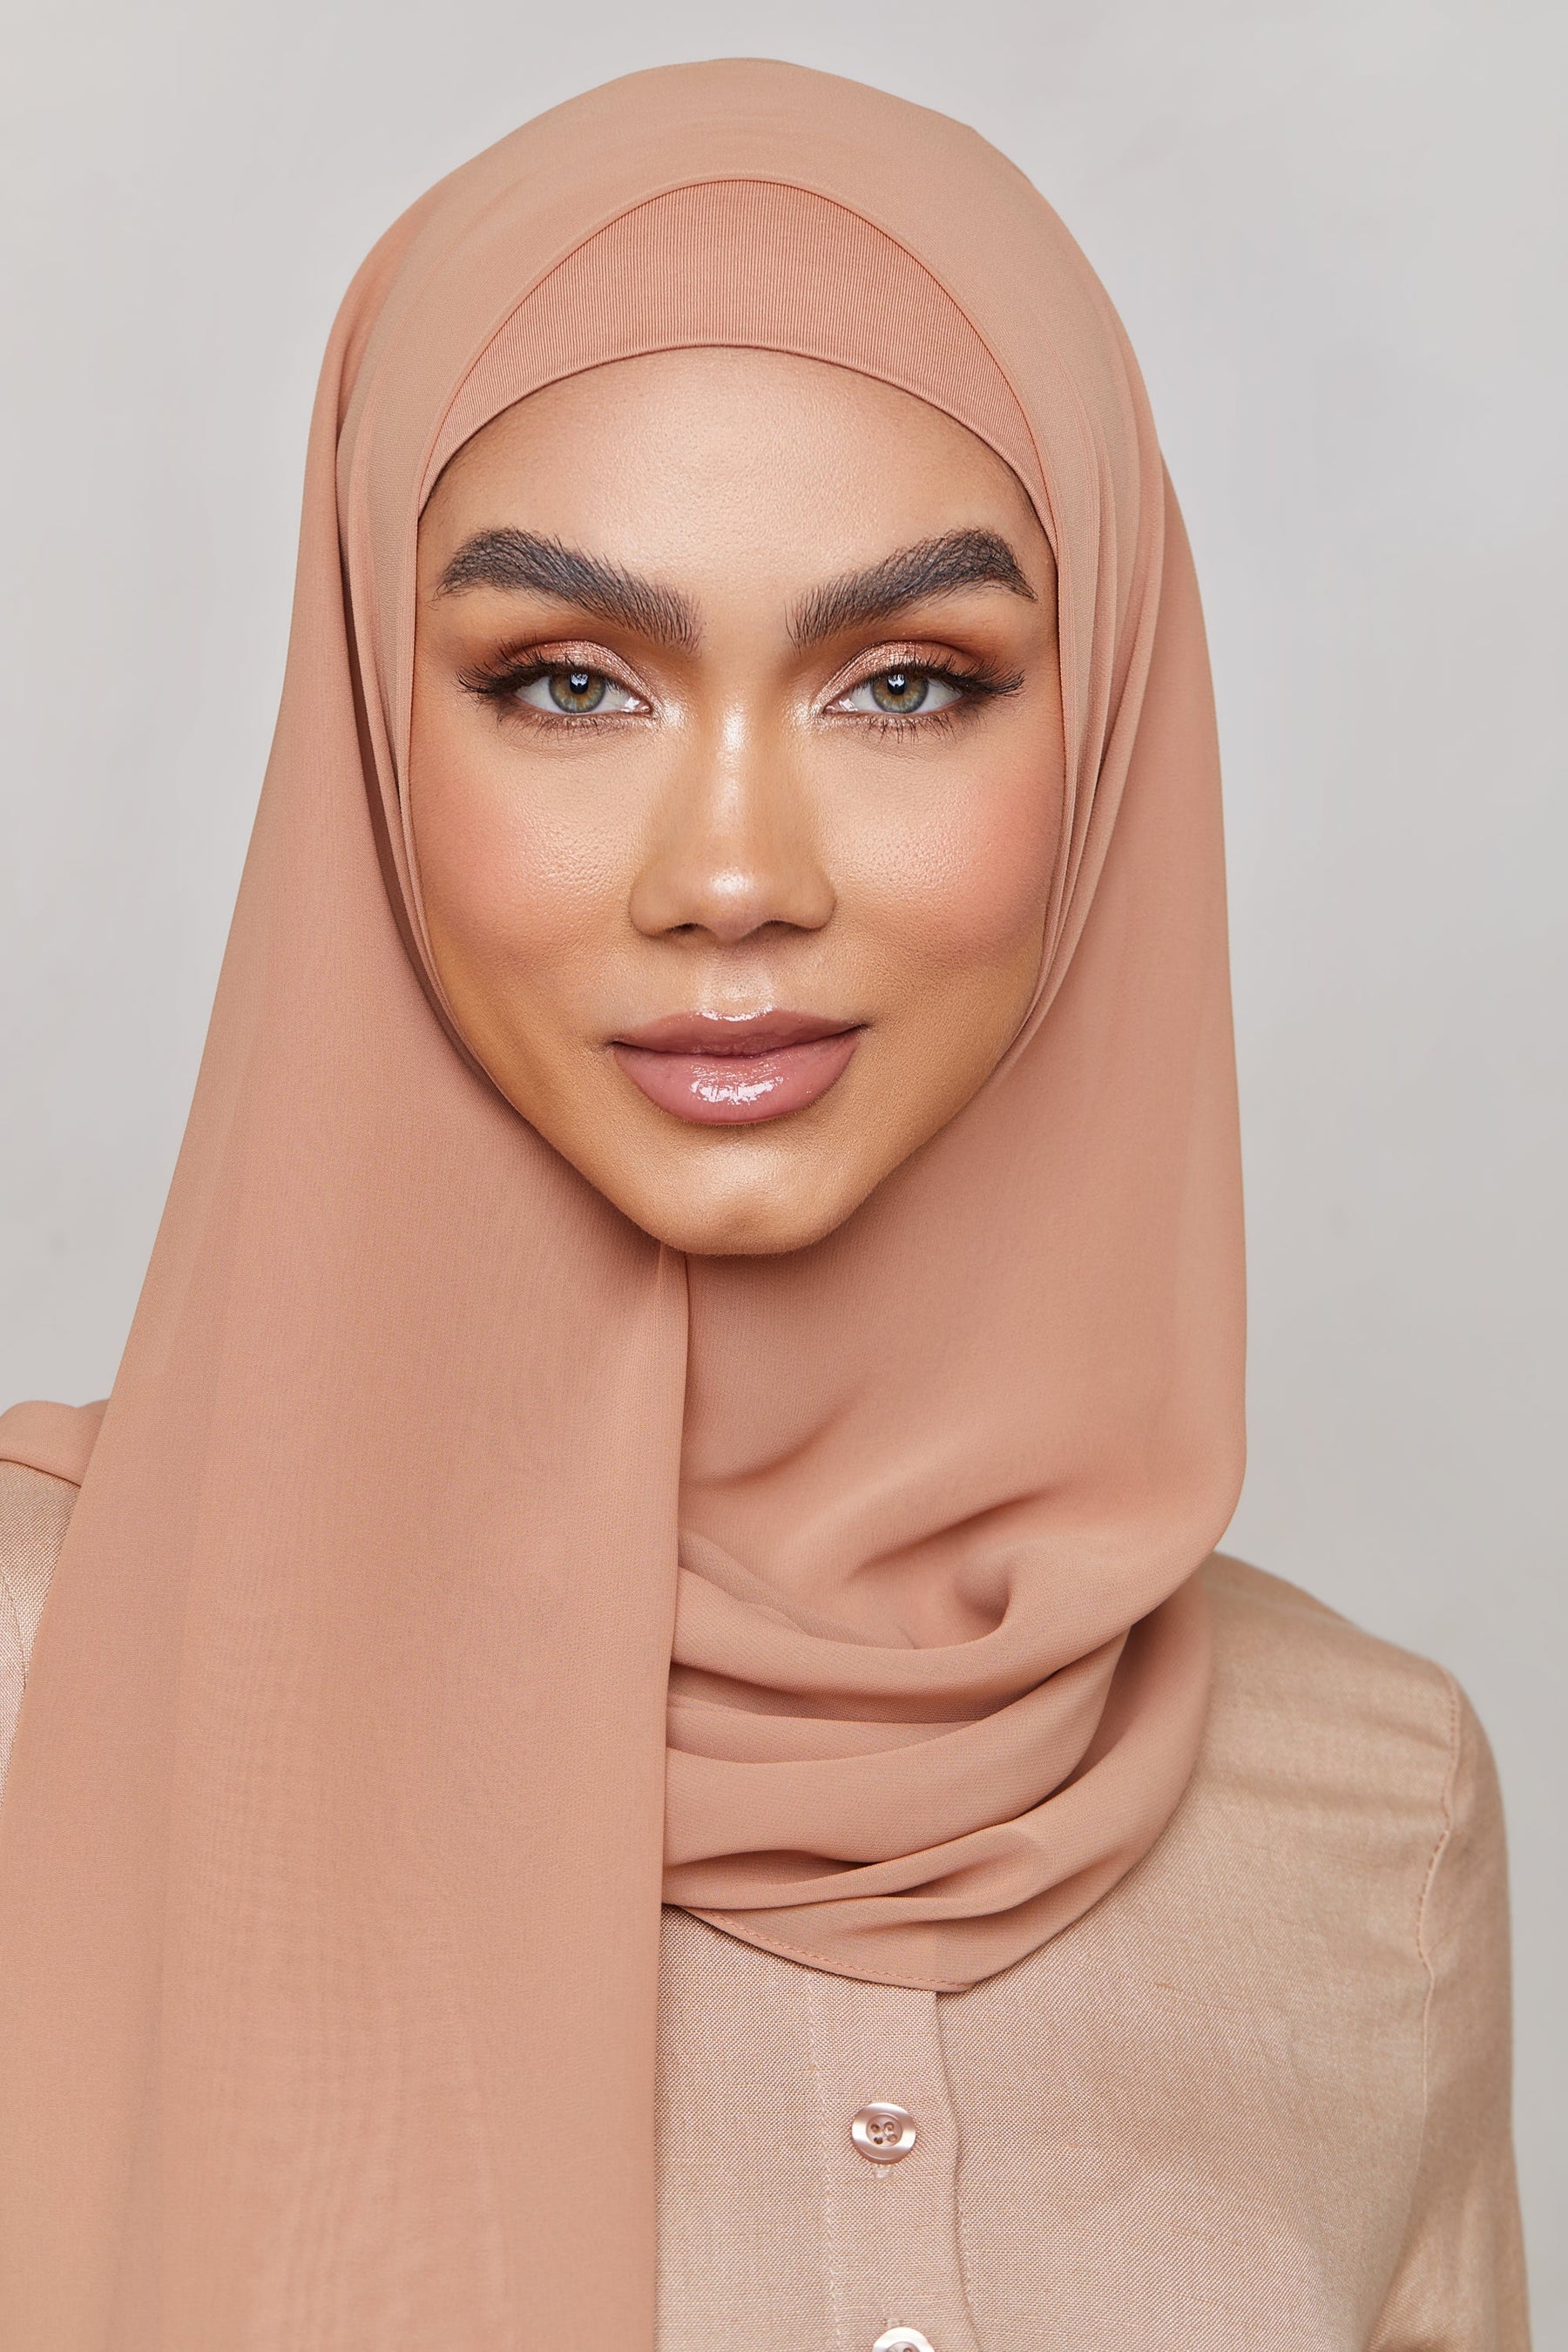 Chiffon LITE Hijab - Tawny Brown Veiled 